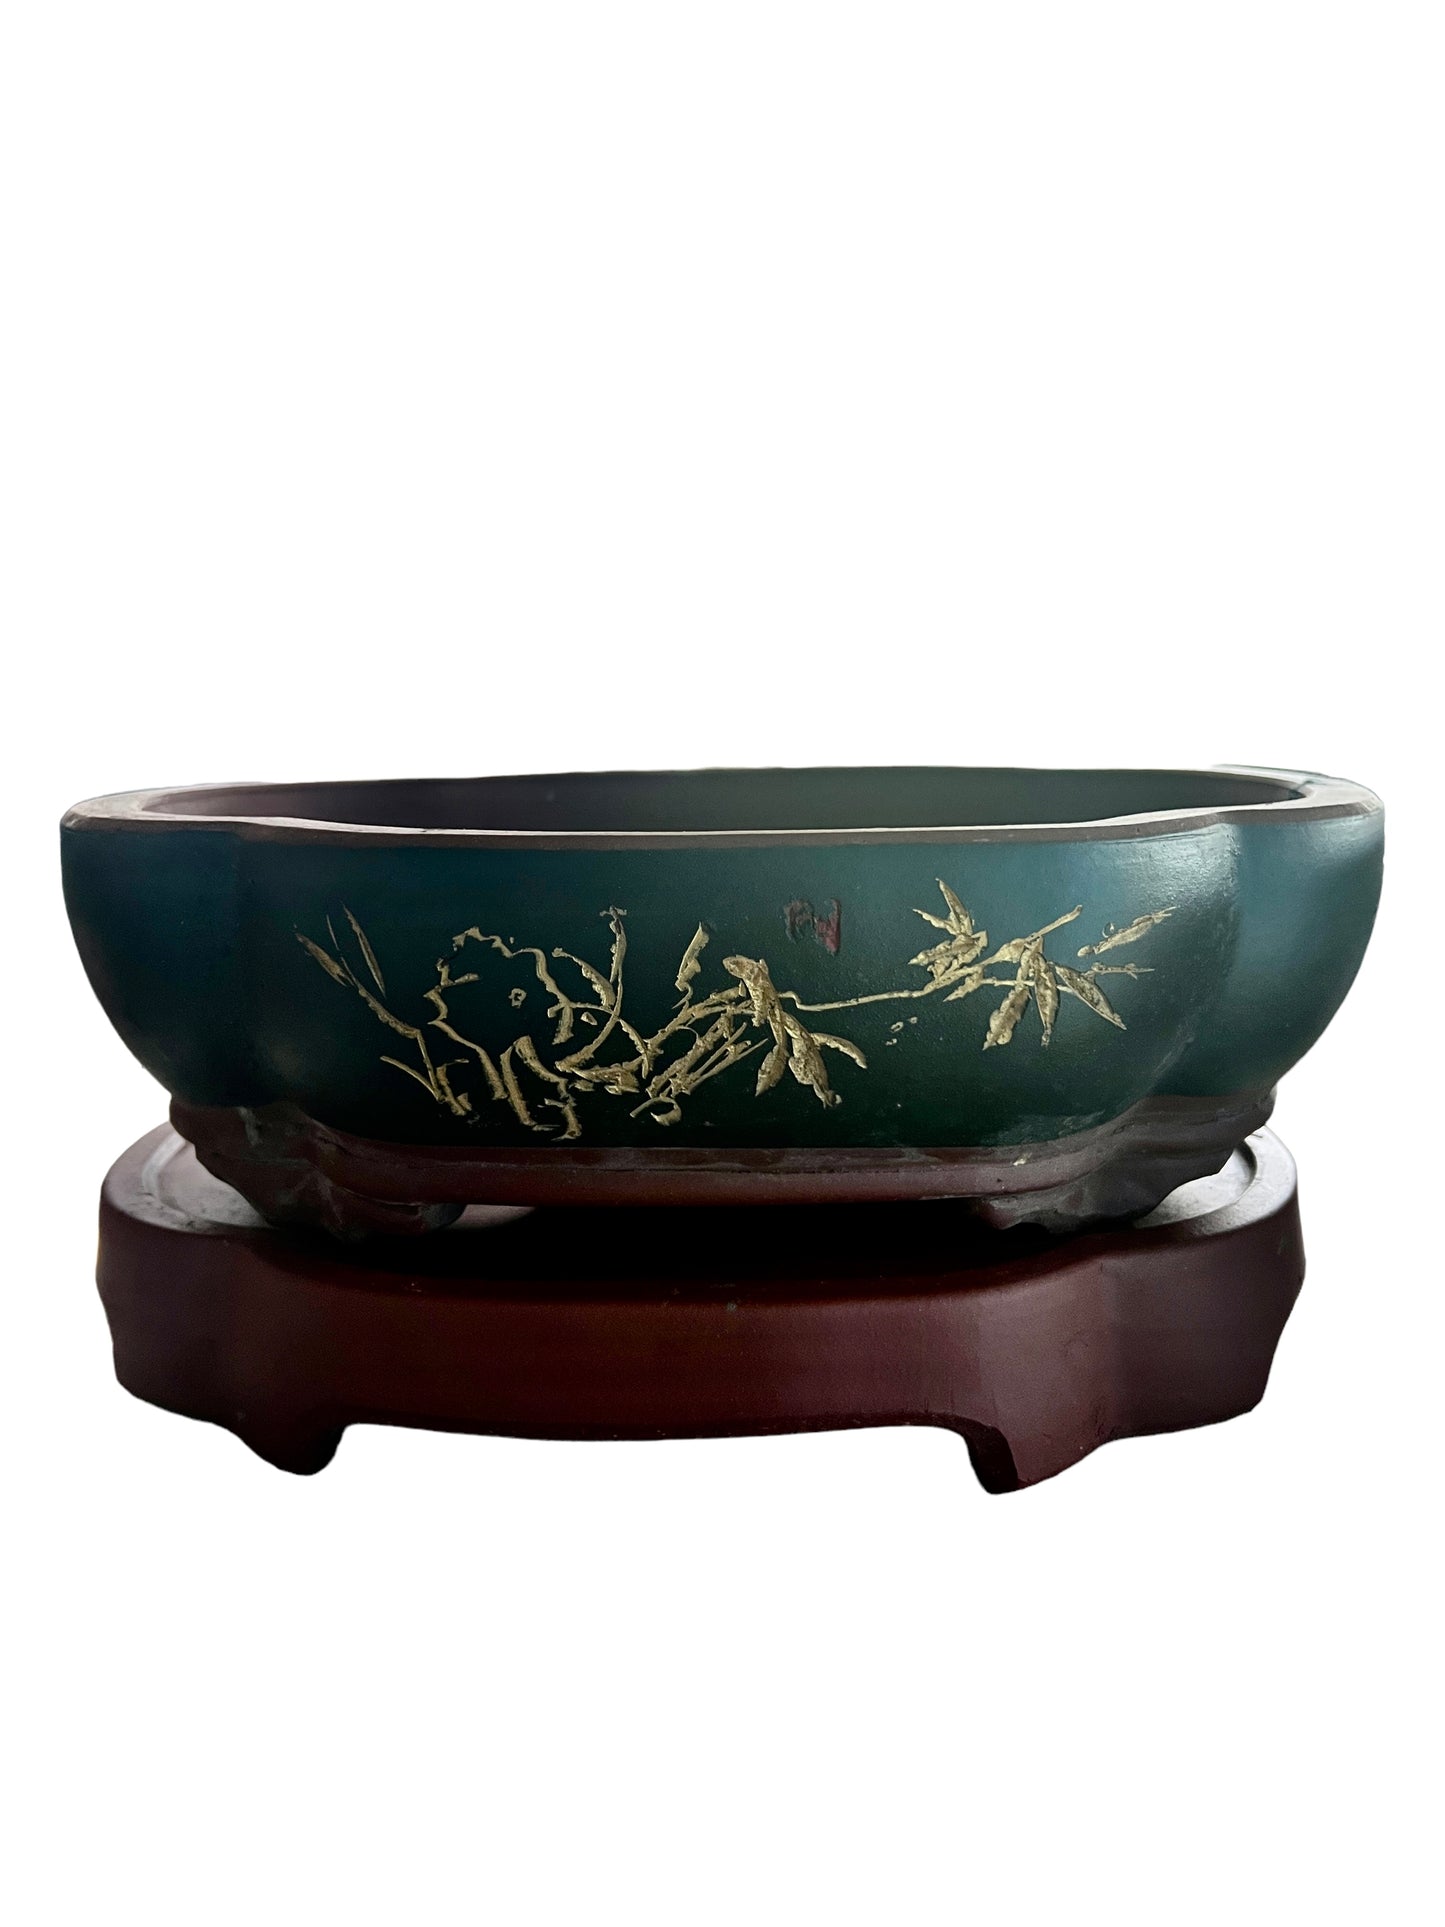 12" Unglazed High Quality Black Clay Ceramic Bonsai Pot With Artwork